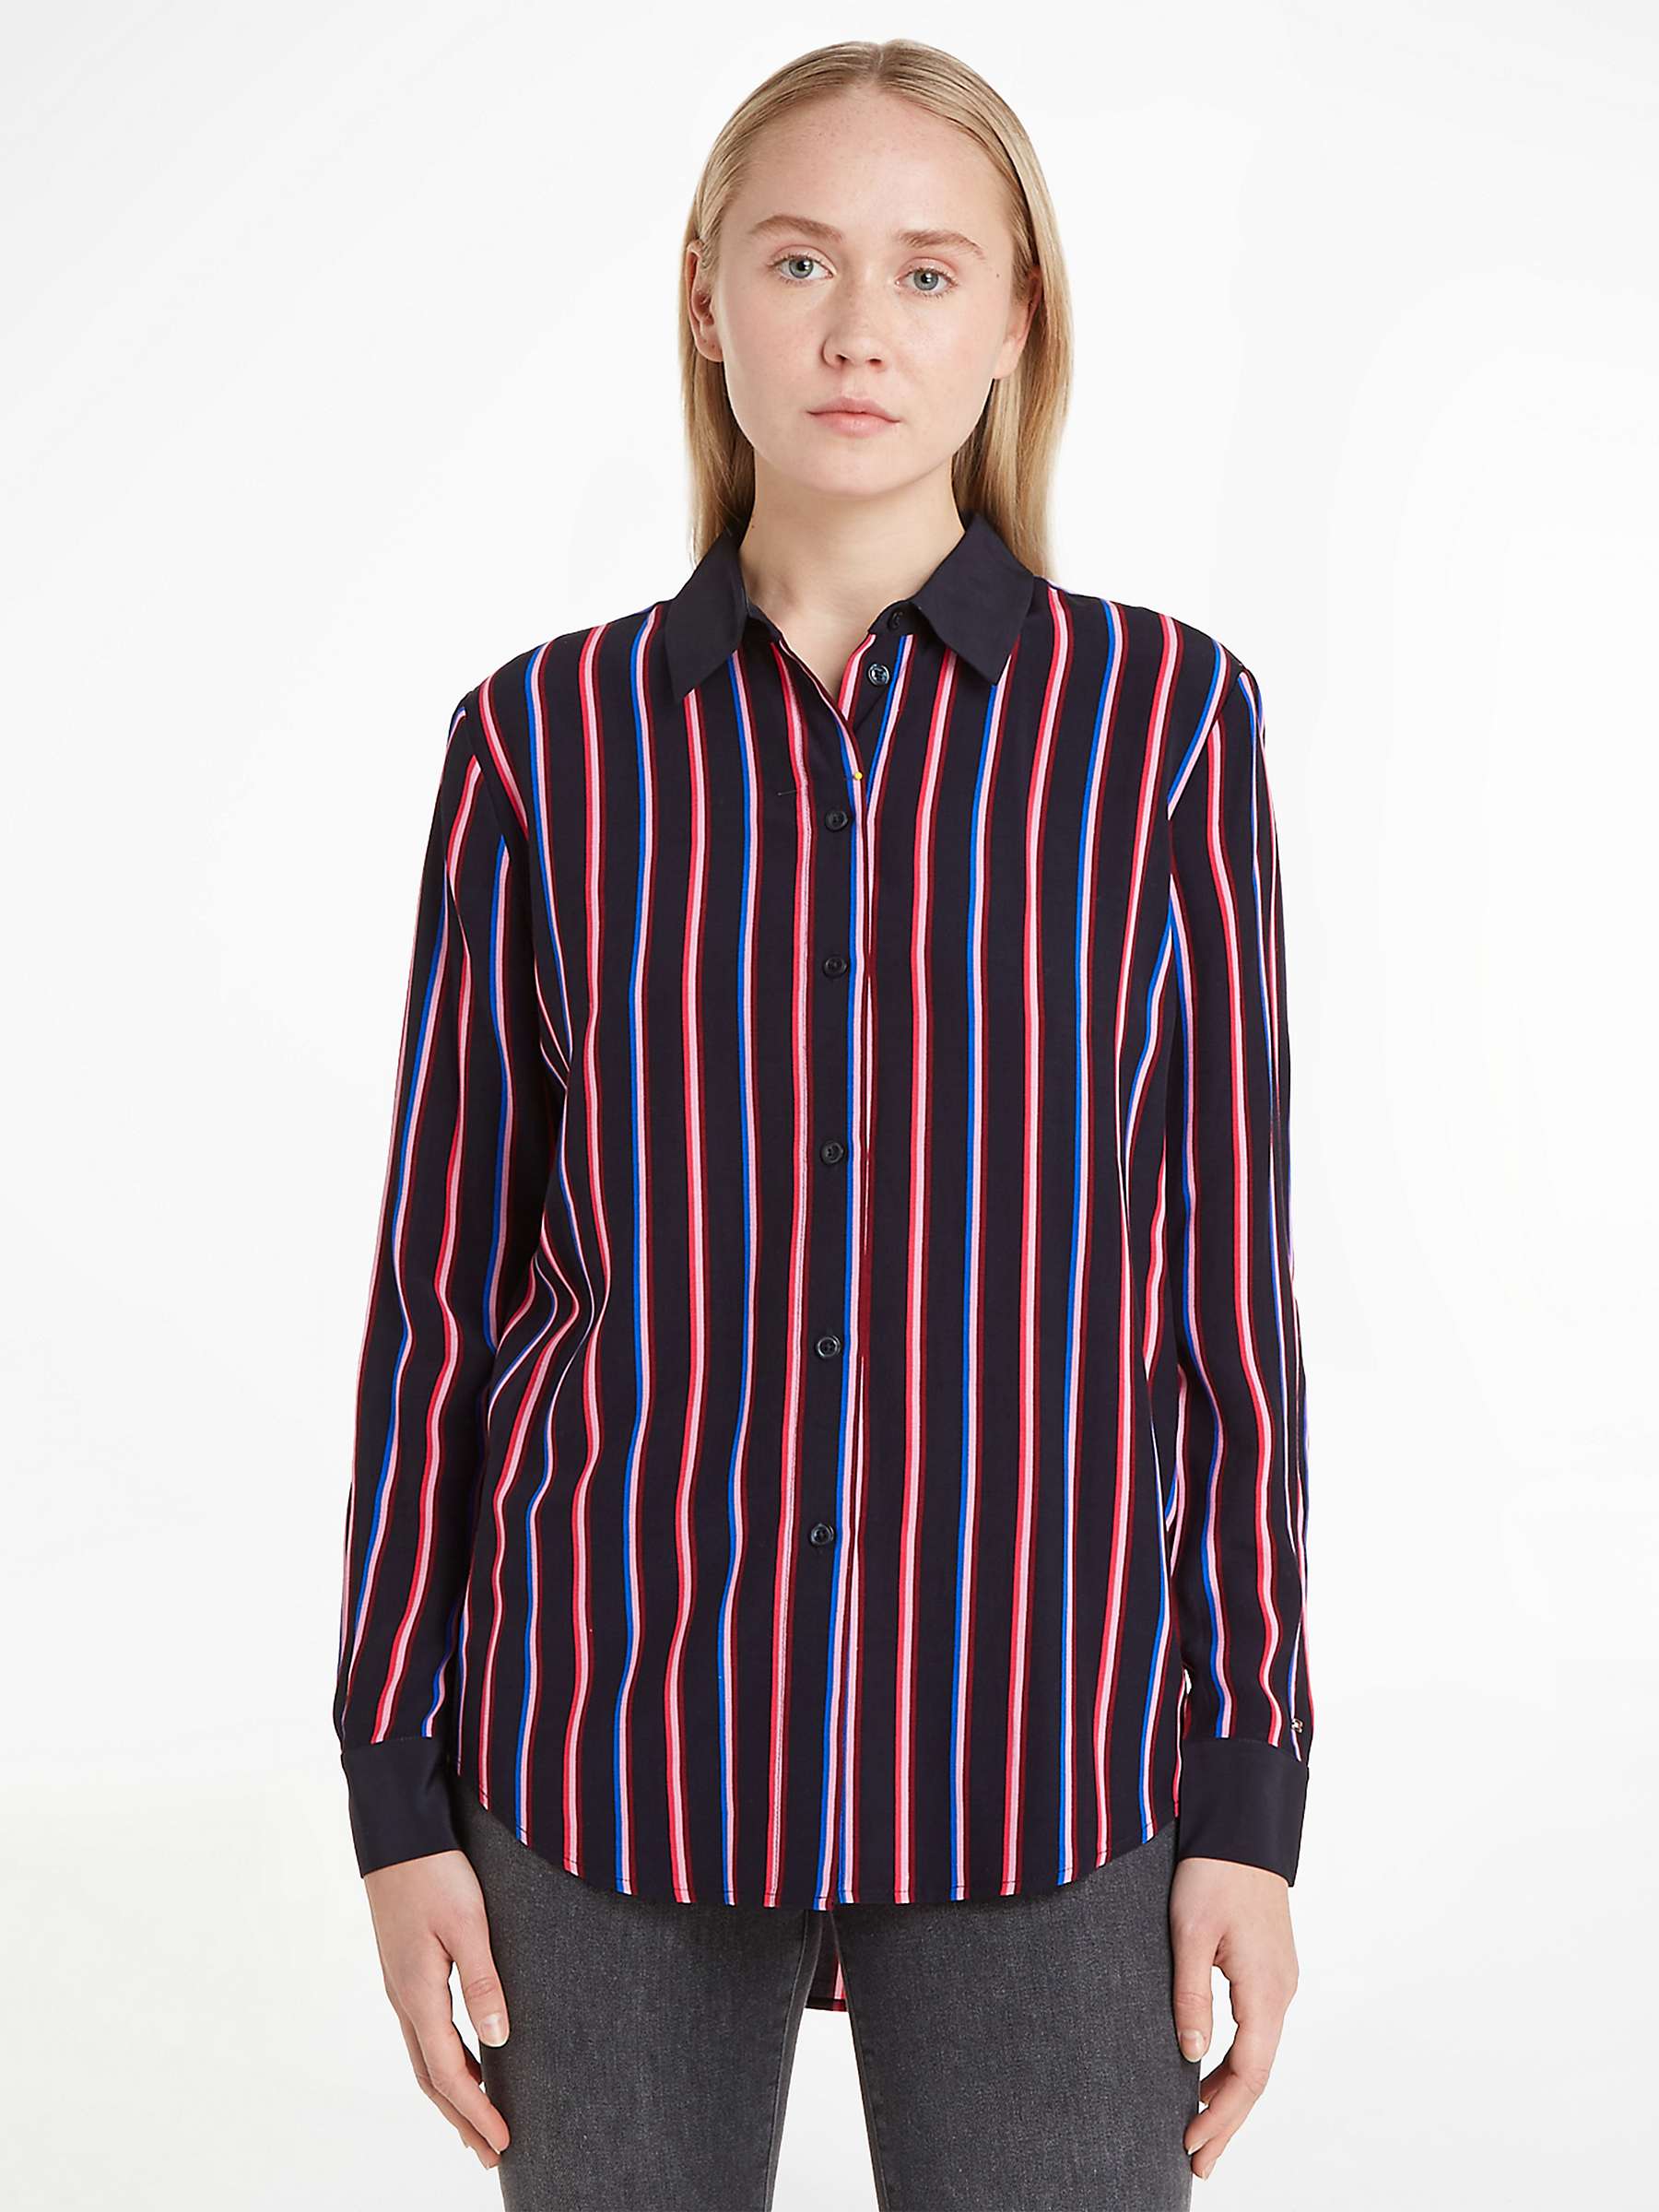 Buy Tommy Hilfiger Fleur Stripe Shirt, Mini Pop Stripe Online at johnlewis.com